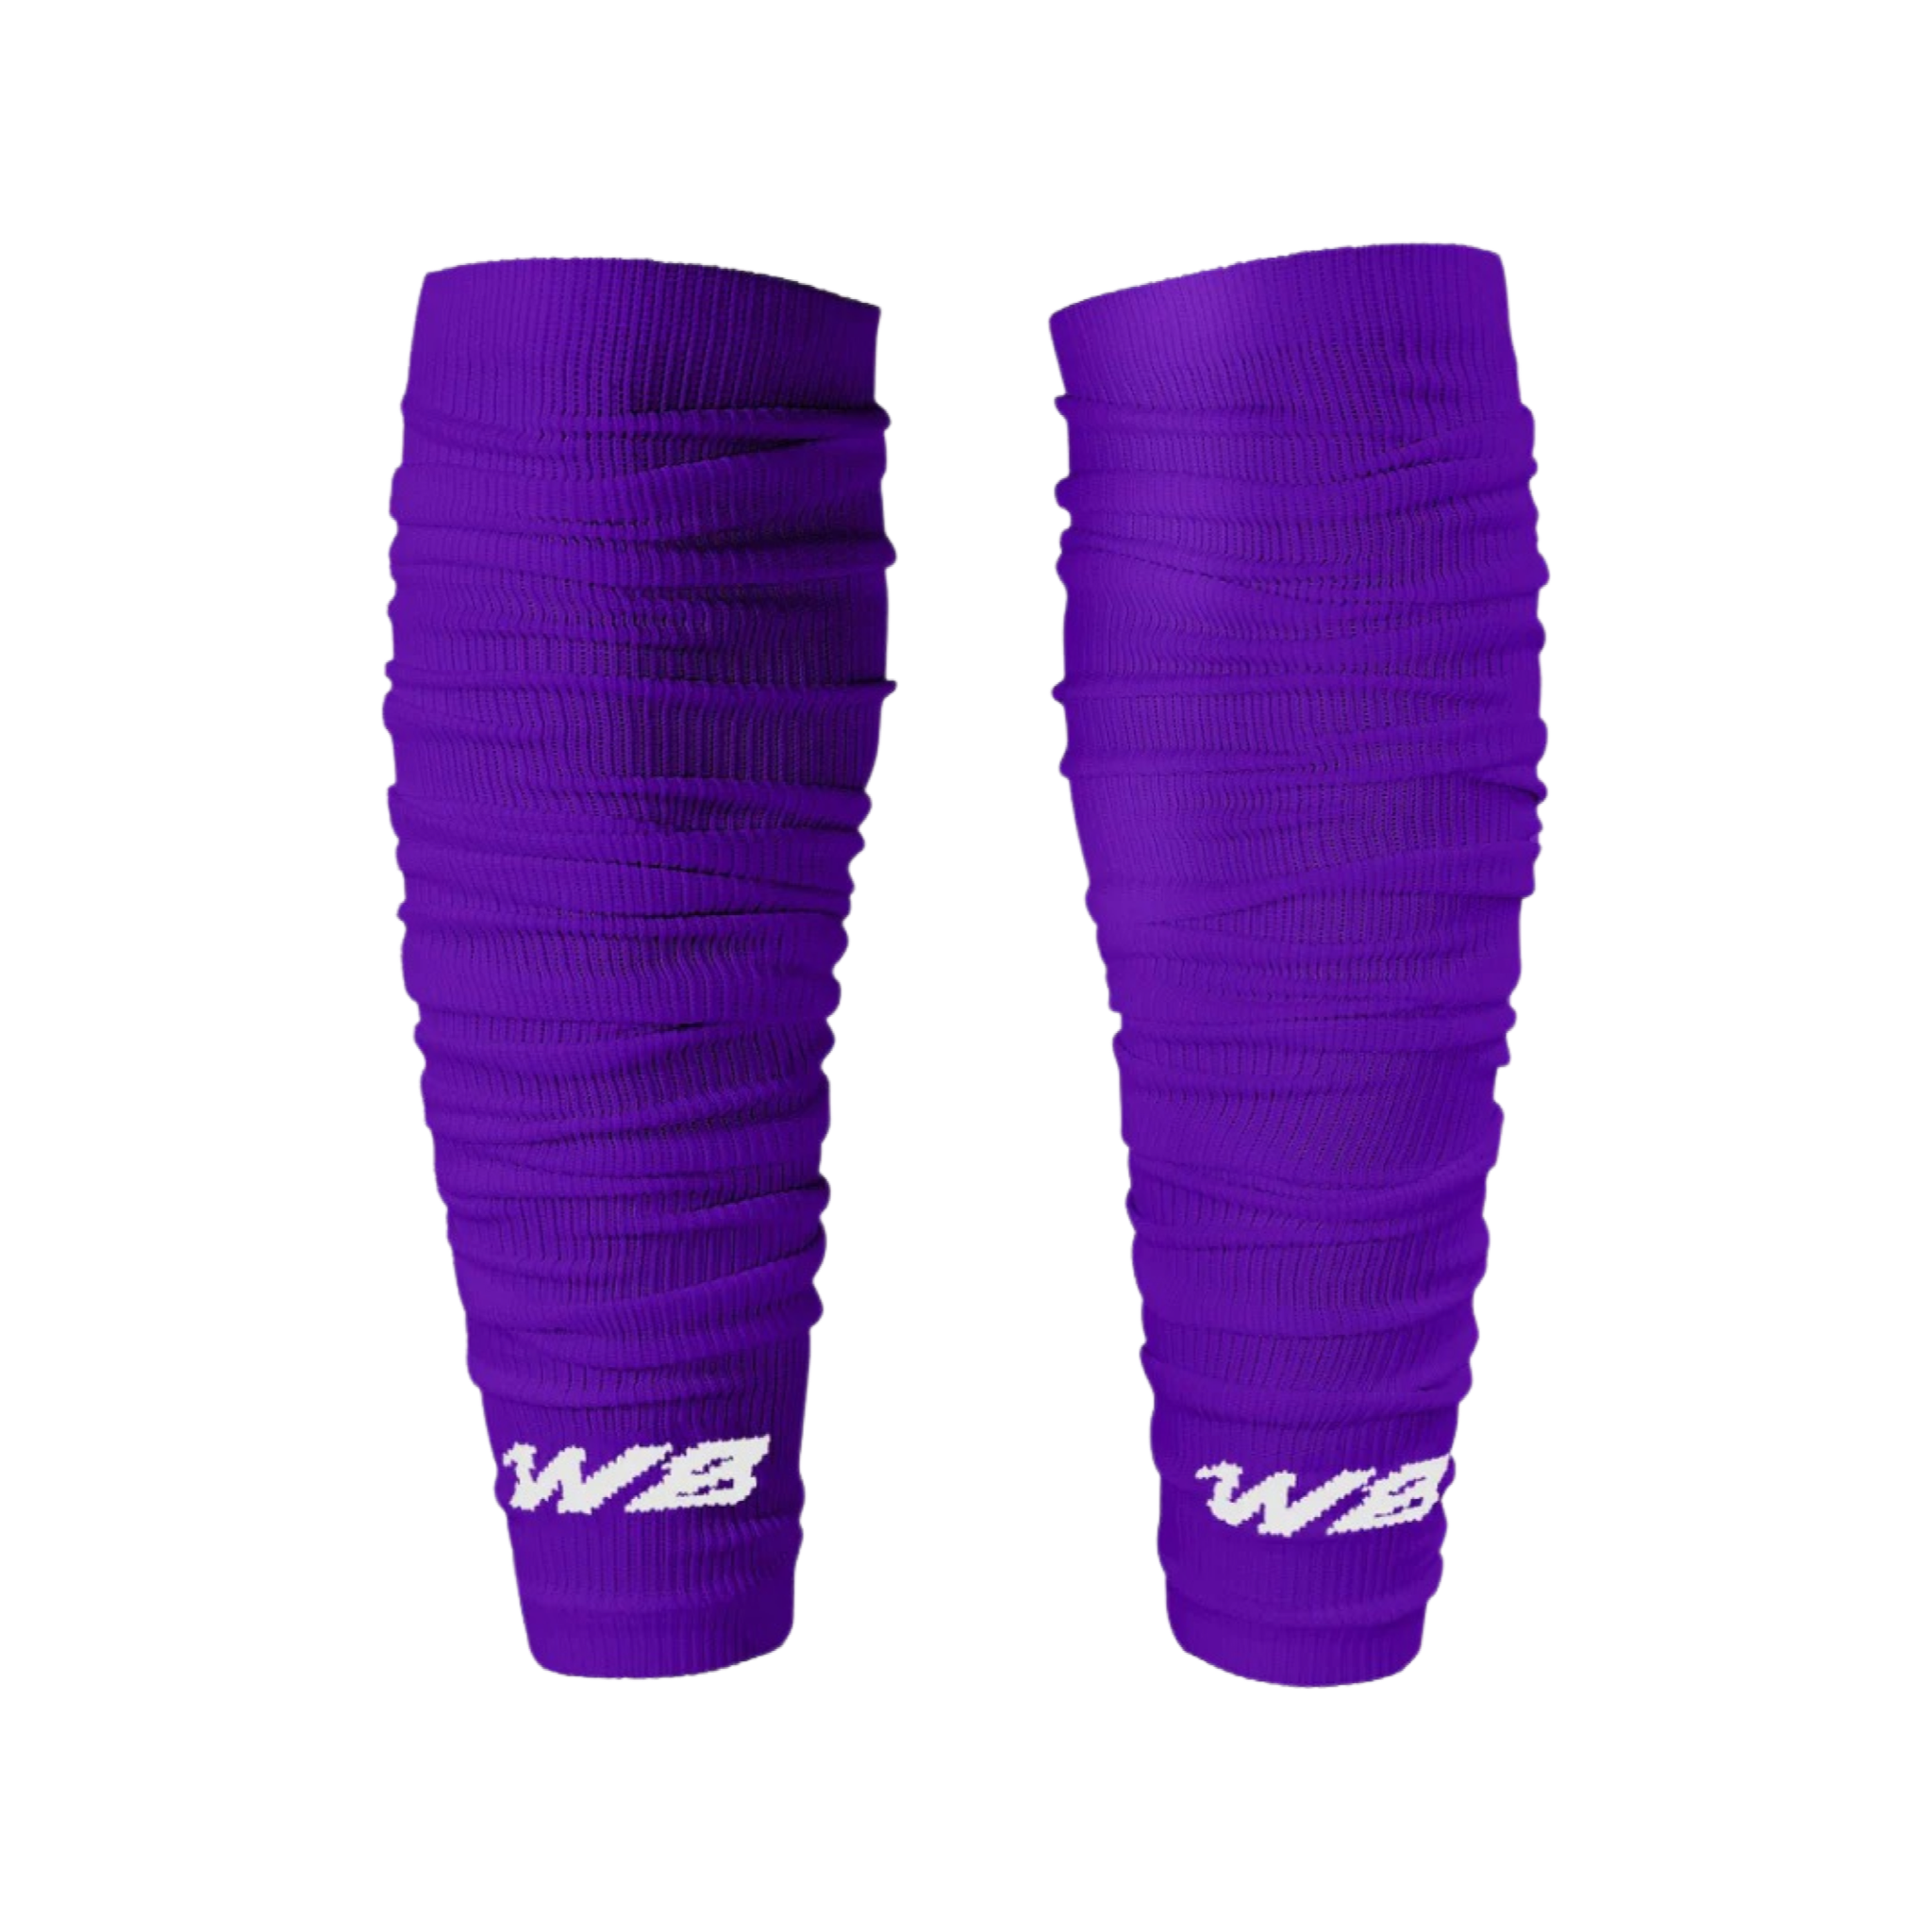 WBS Football Leg Sleeves 2.0- Calf sleeves